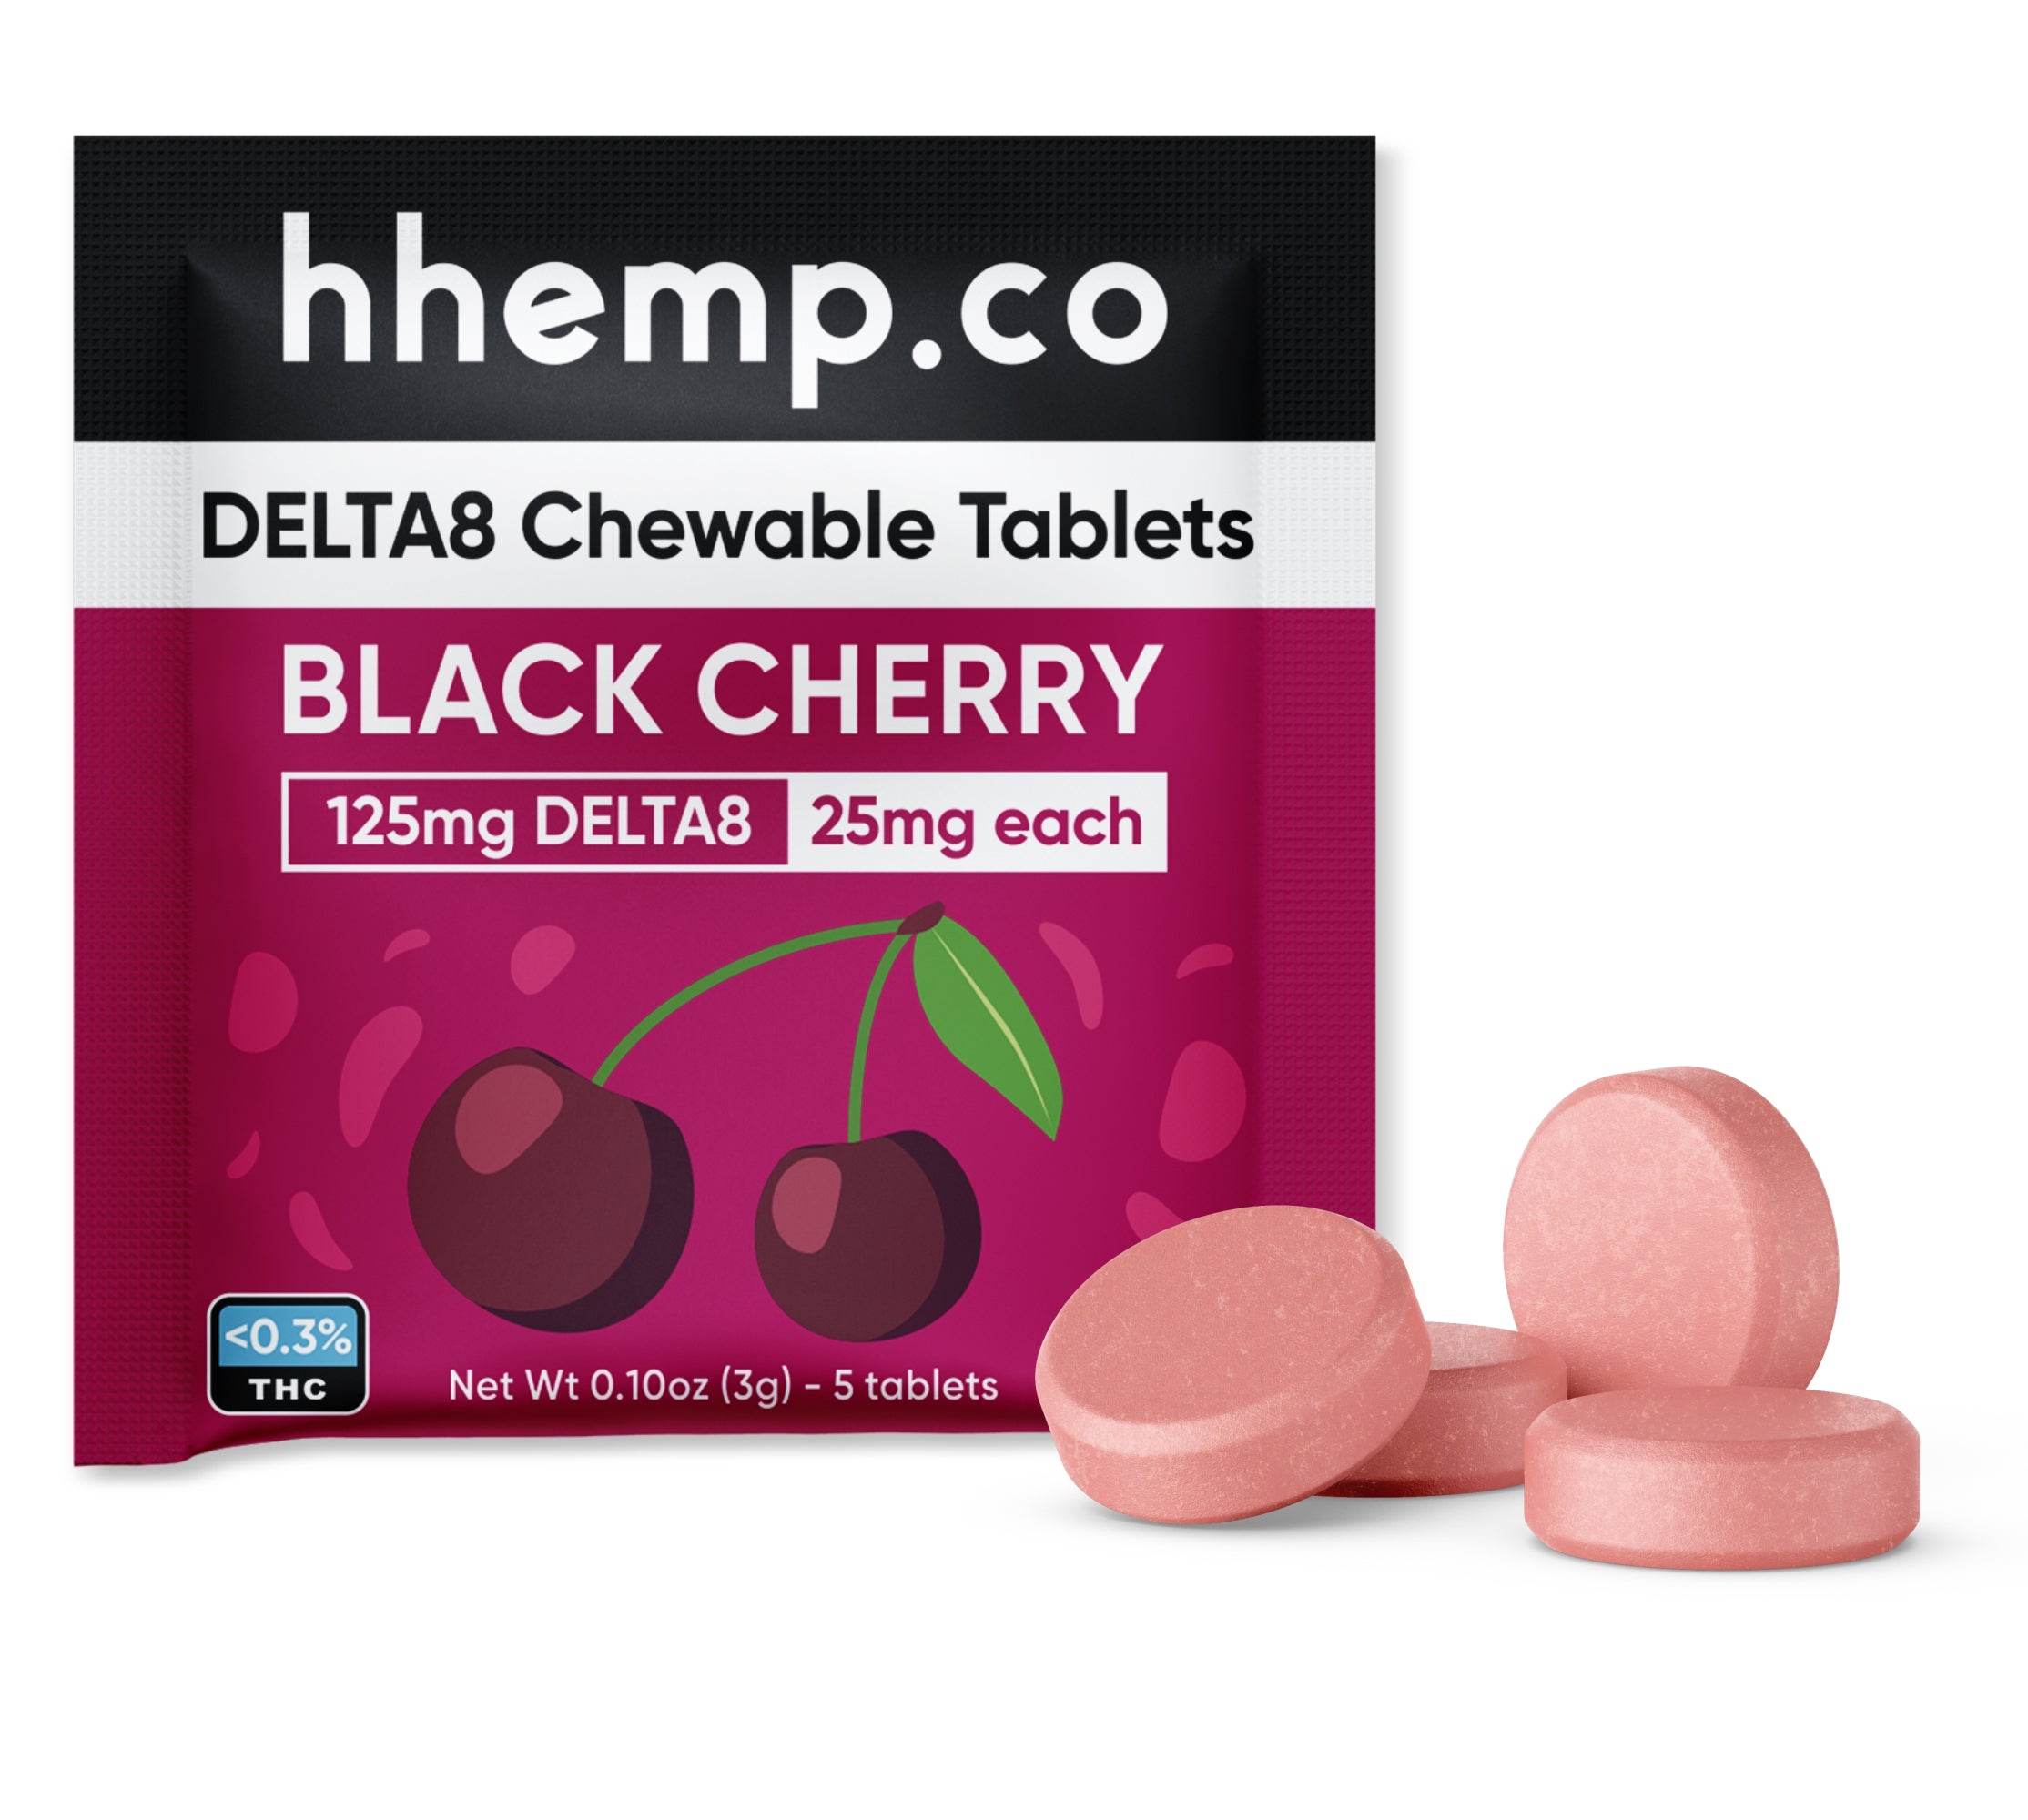 hhemp.co Delta 8 Chewable - Black Cherry